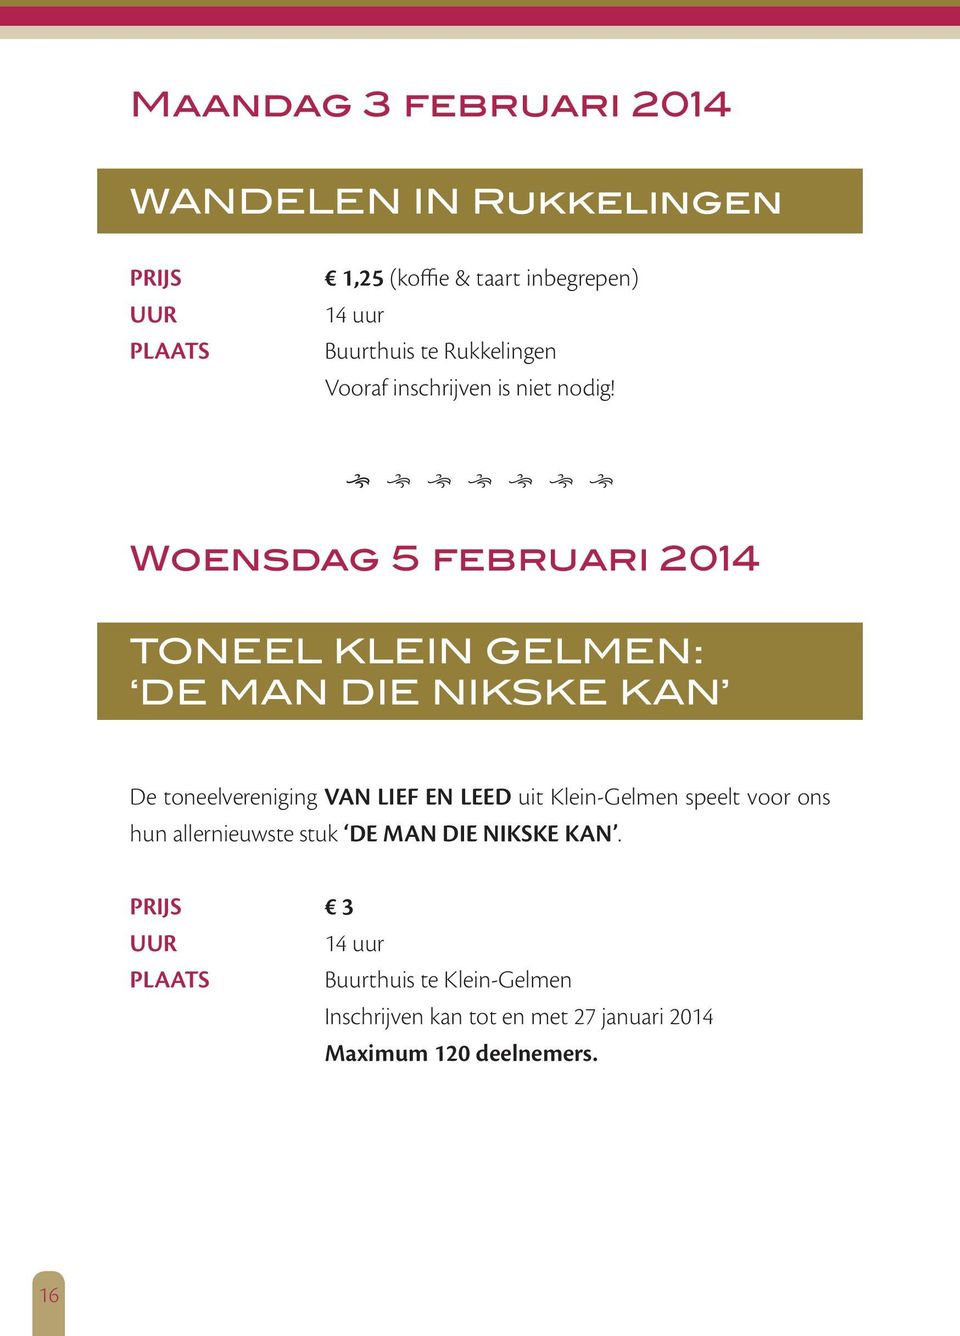 Woensdag 5 februari 2014 TONEEL KLEIN GELMEN: DE MAN DIE NIKSKE KAN De toneelvereniging VAN LIEF EN LEED uit